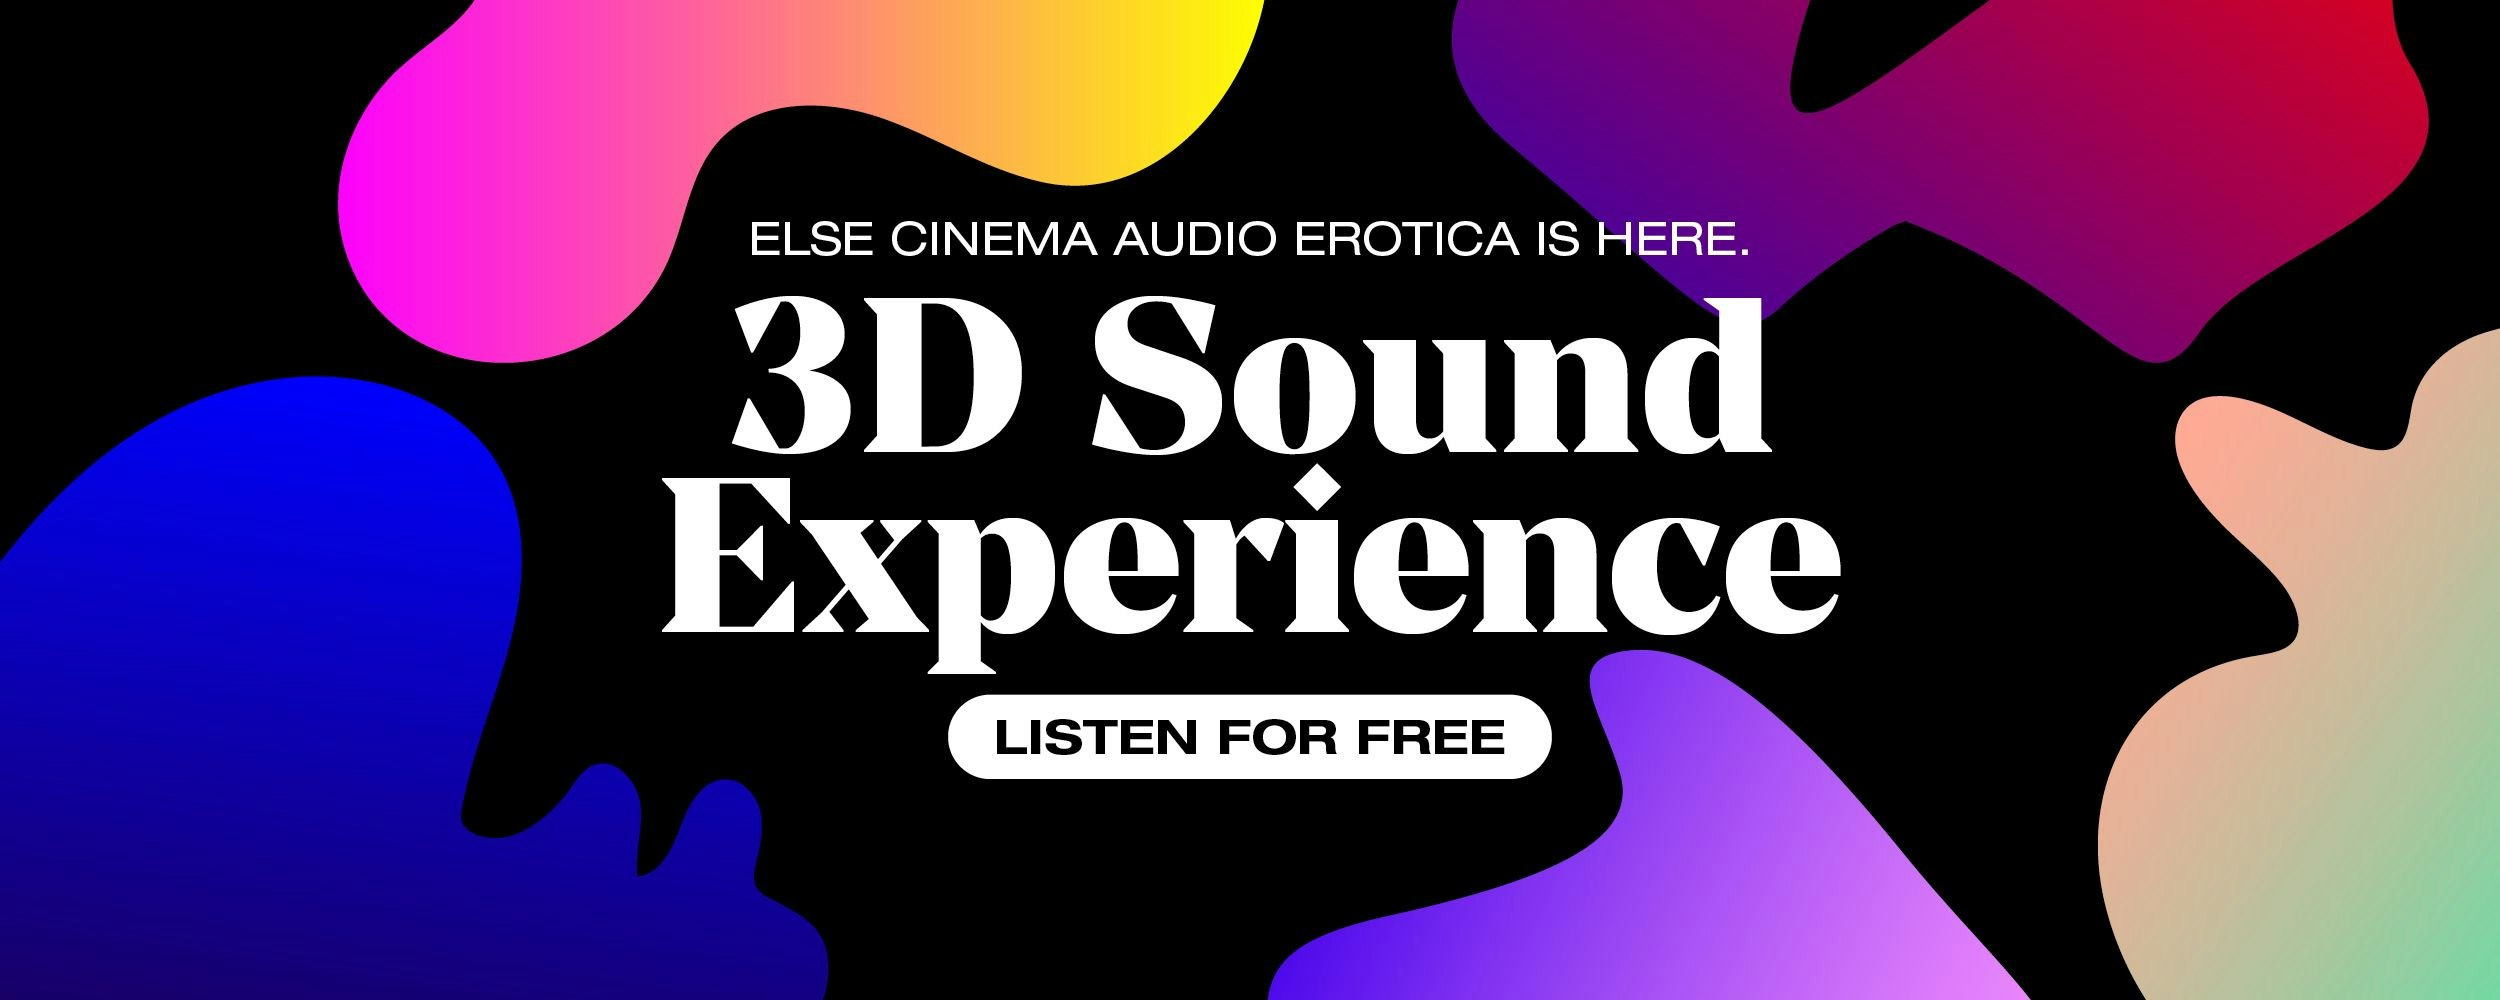 New Else Cinema Audio Porn Listen for Free photo image